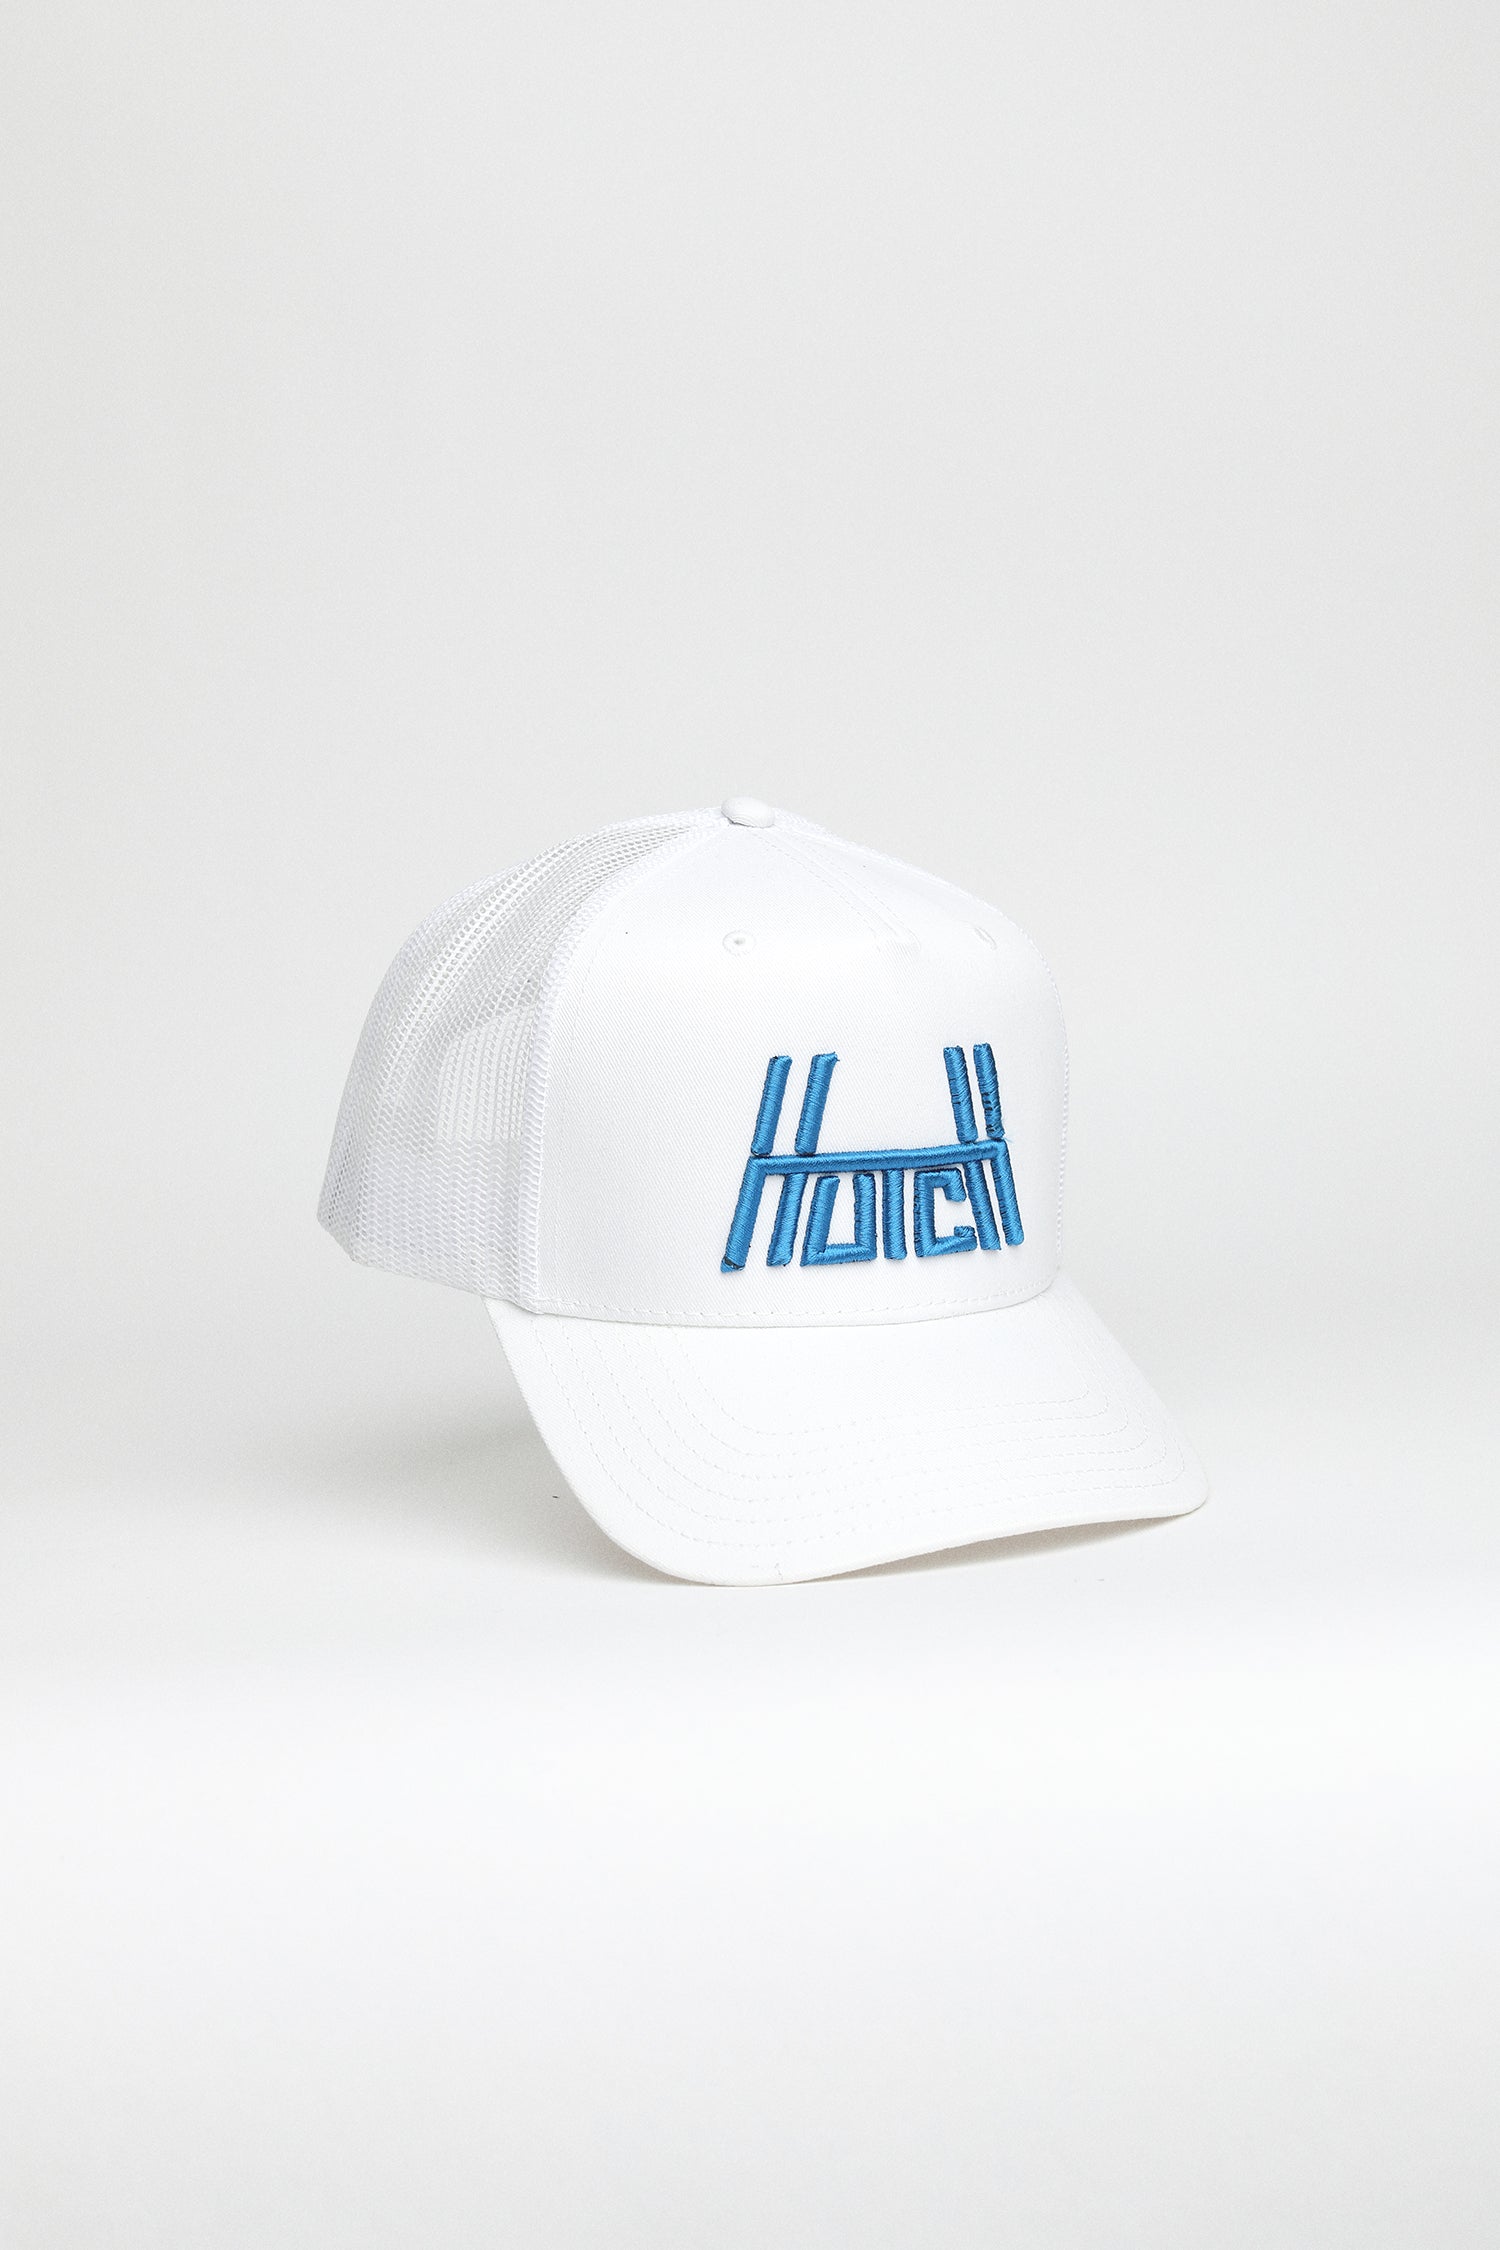 Aidan Hutchinson Trucker Hat – House of Hutch